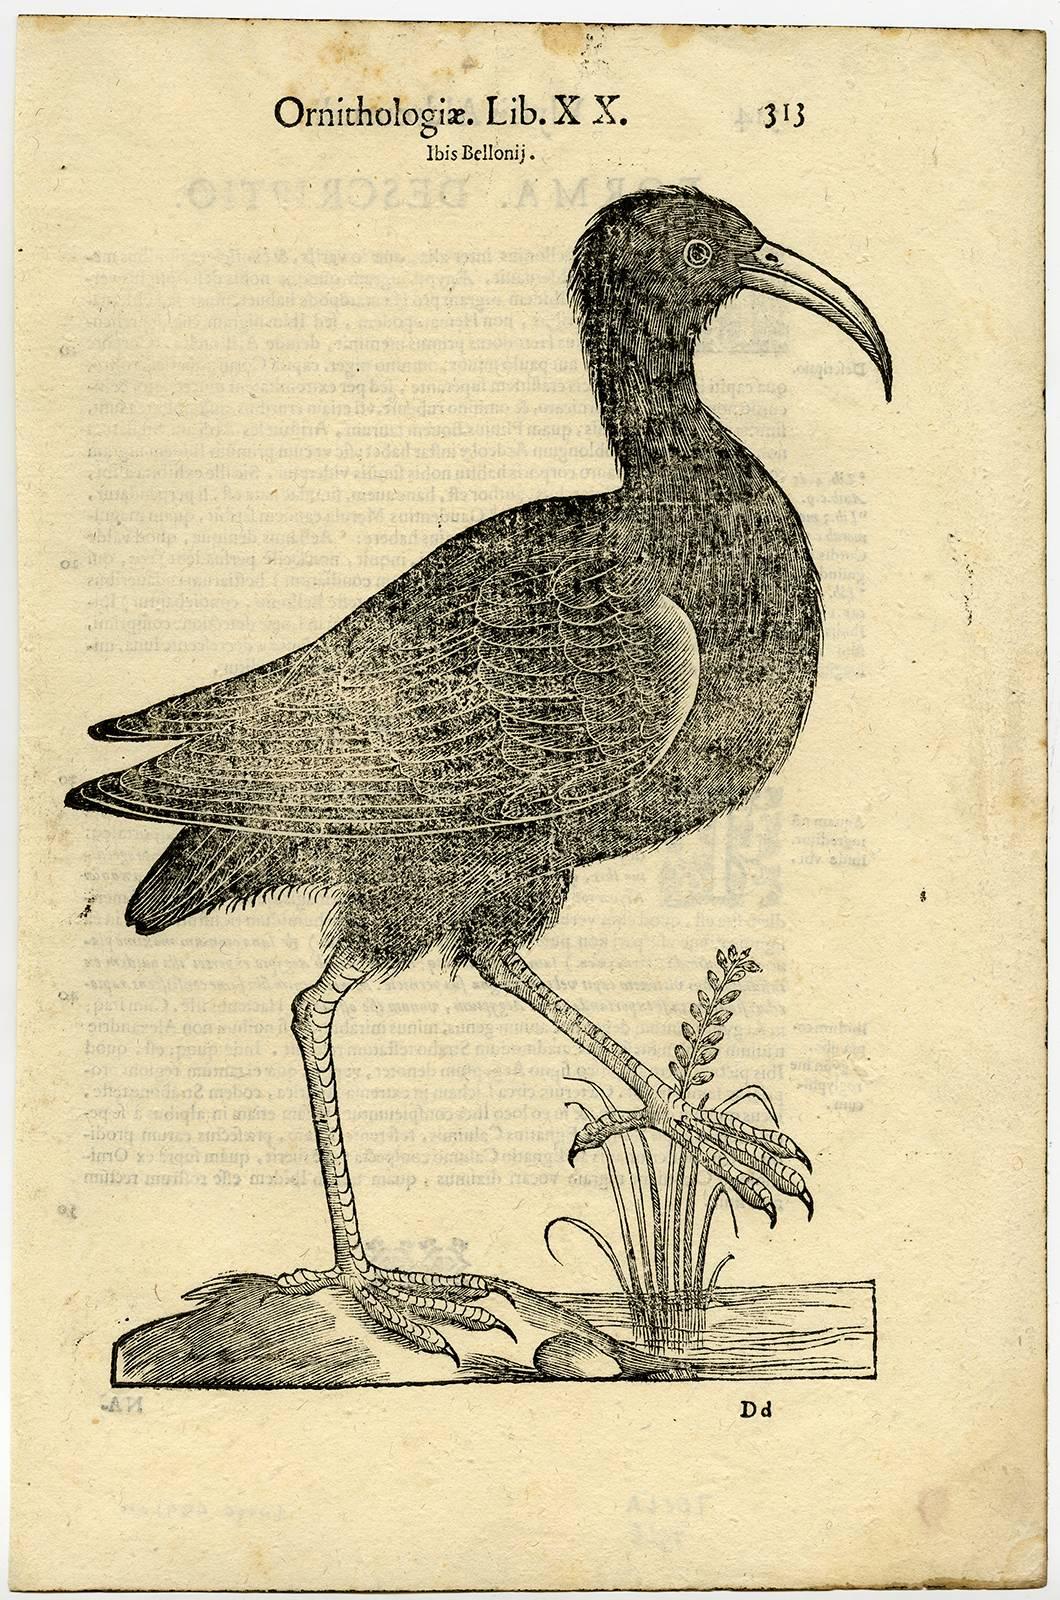 Cristoforo Coriolano Animal Print - Ibis Bellonii.'' - An ibis species.